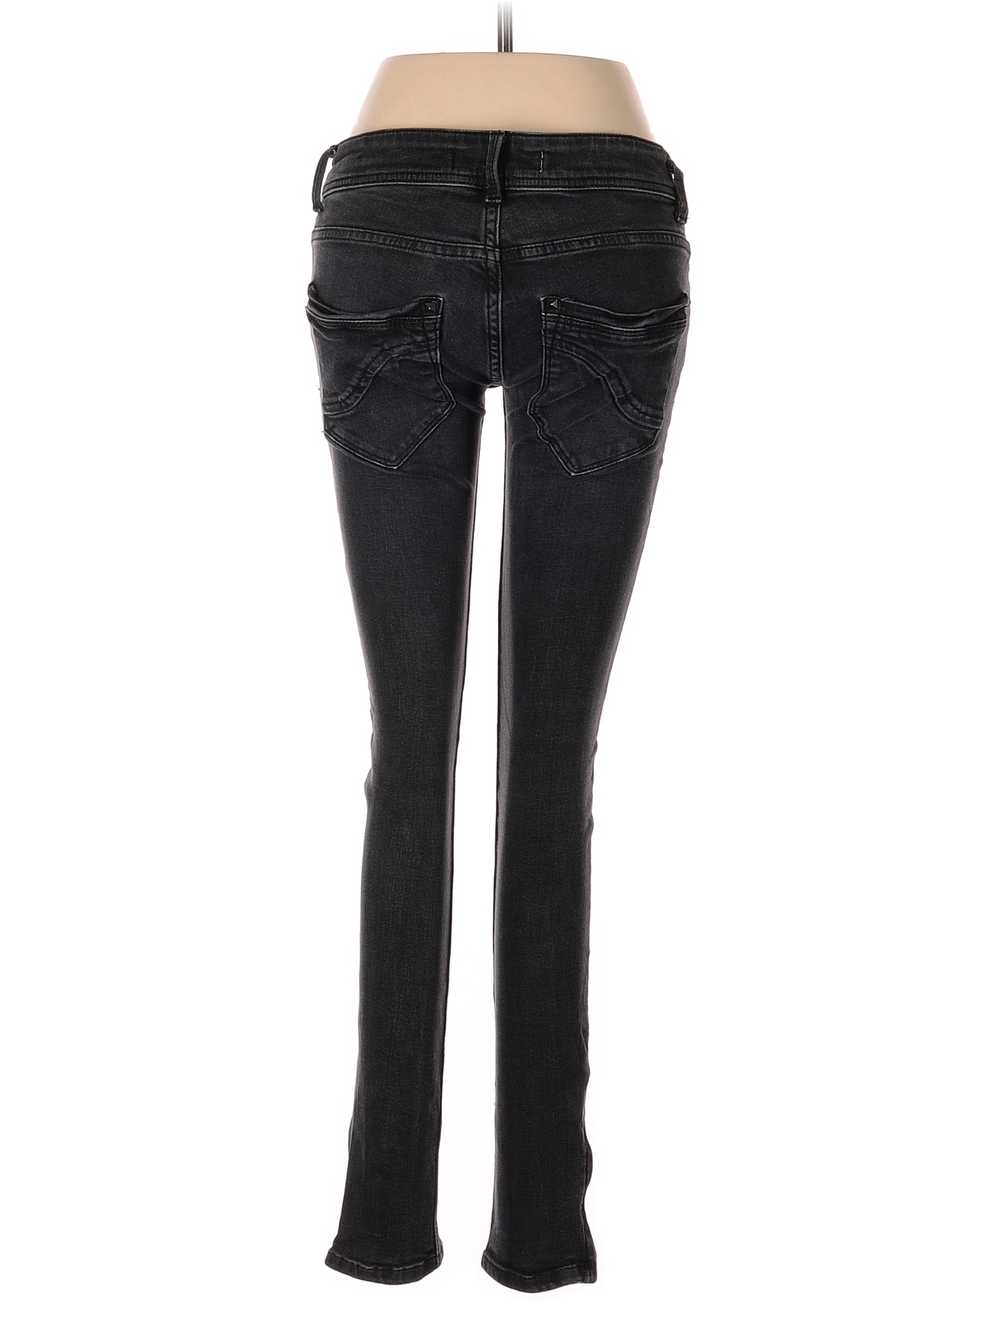 Trf Denim Rules Women Black Jeans 6 - image 2